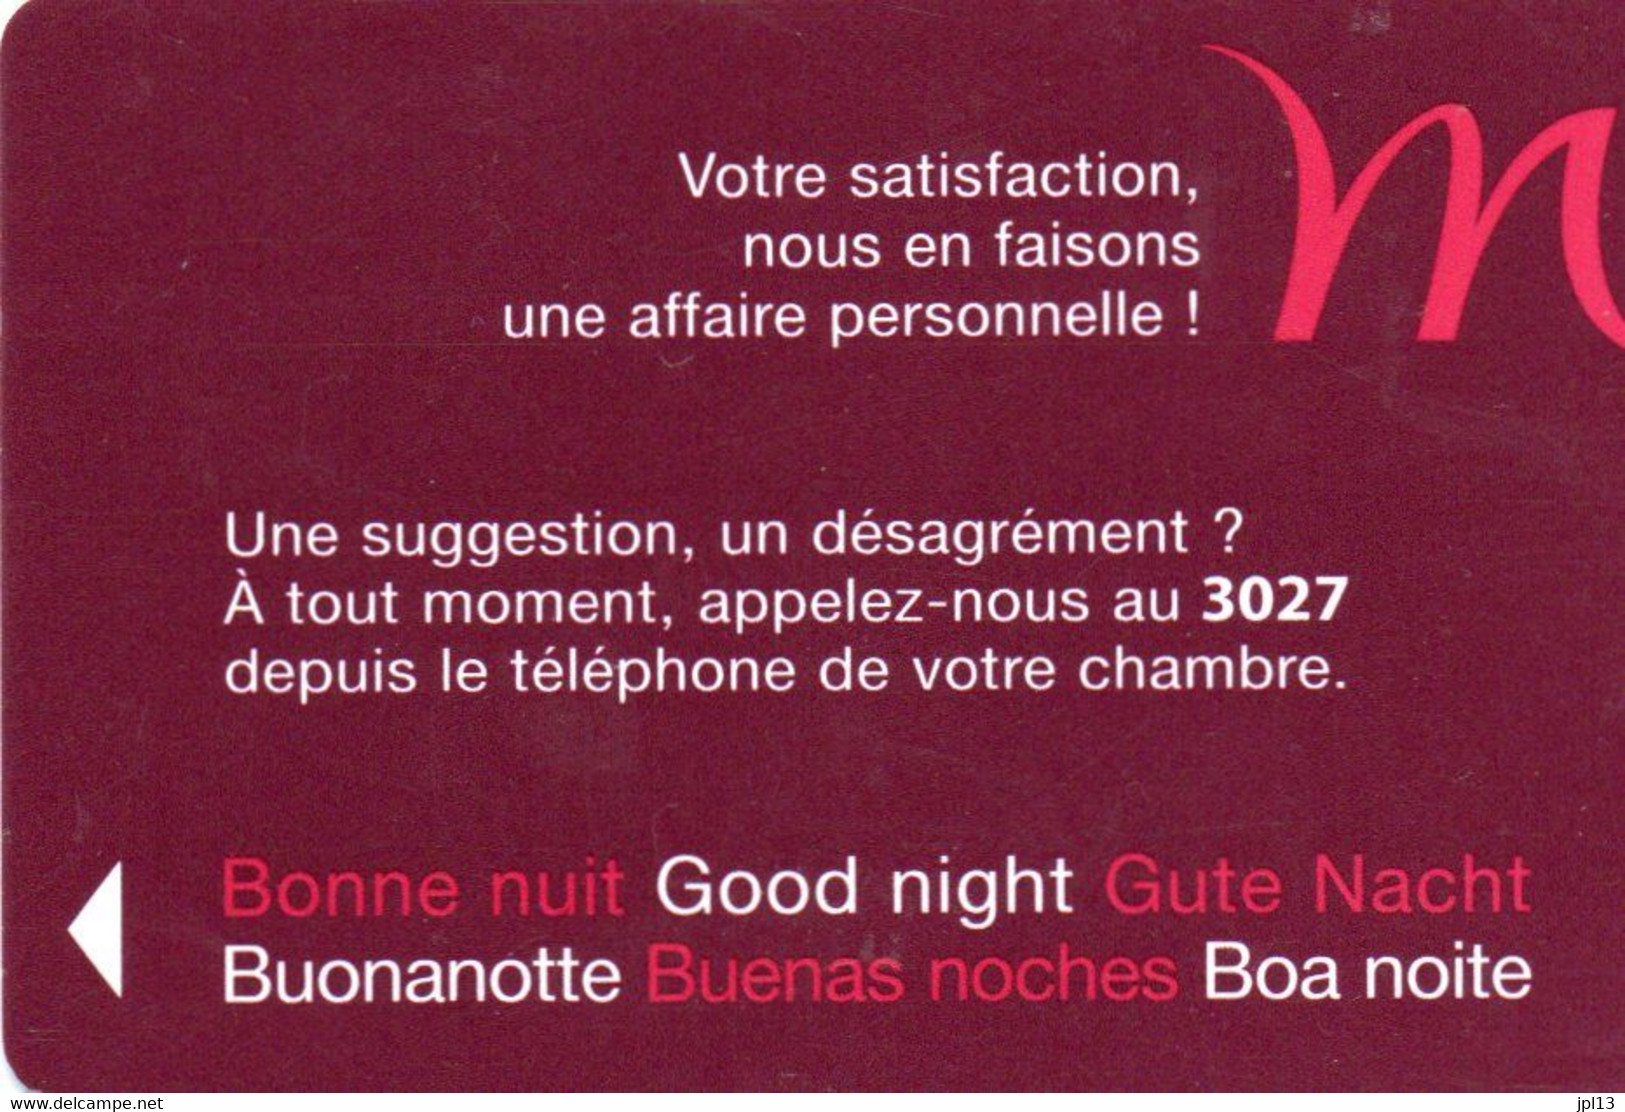 Clef D'hôtel - France - Mercure Hôtels, 3027 - Hotel Key Cards